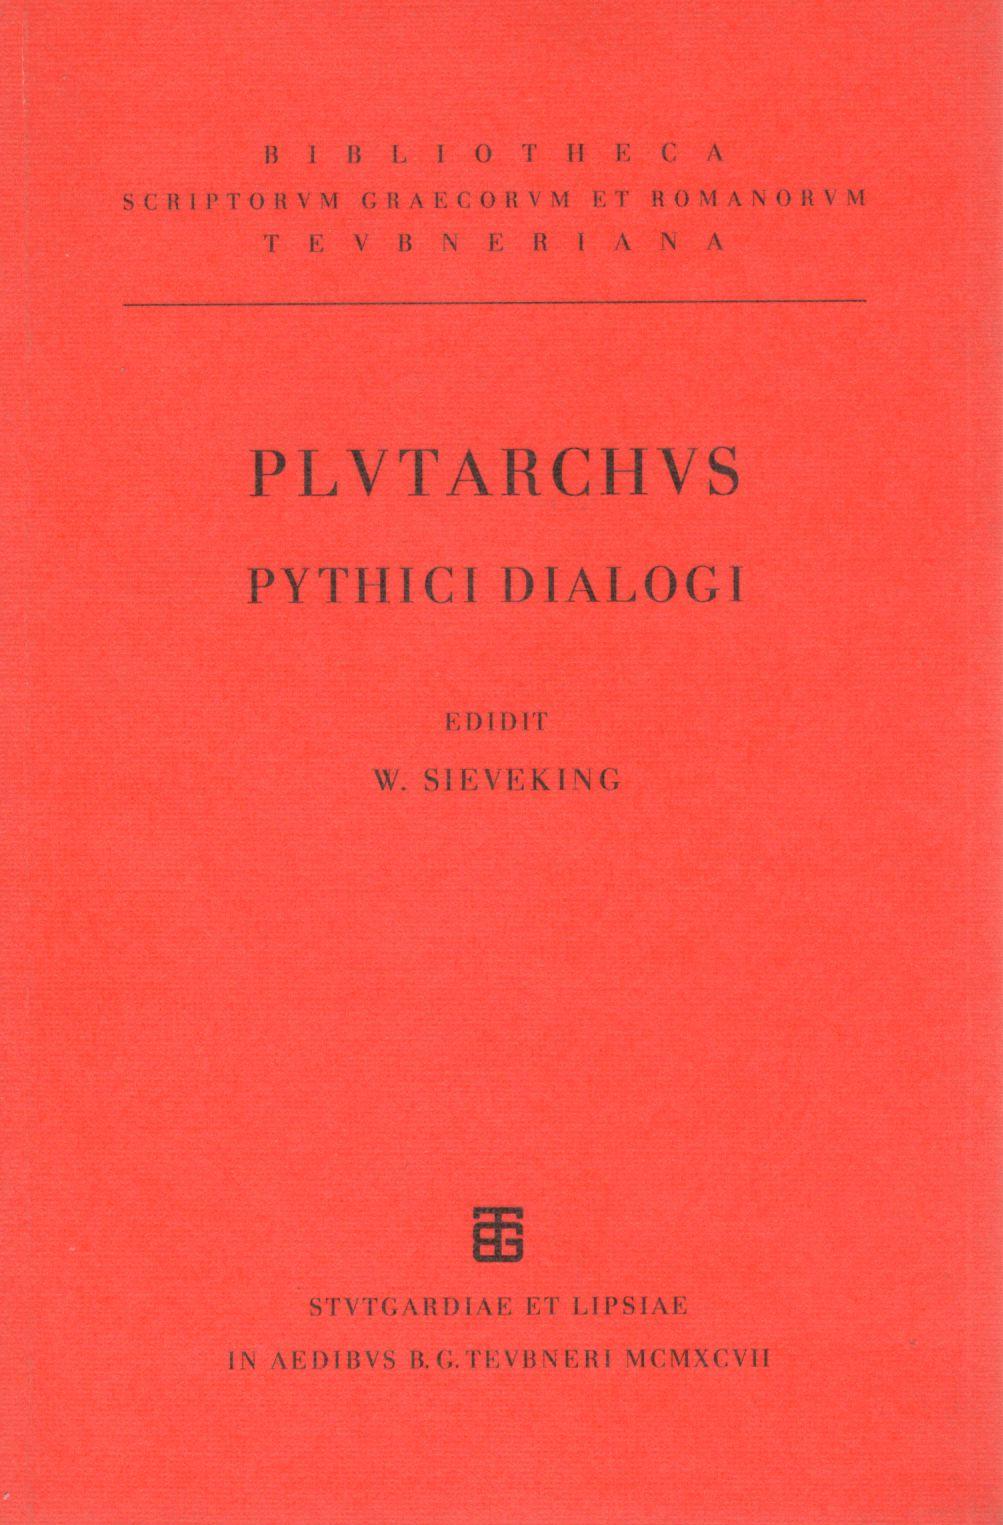 PLUTARCHI PYTHICI DIALOGI